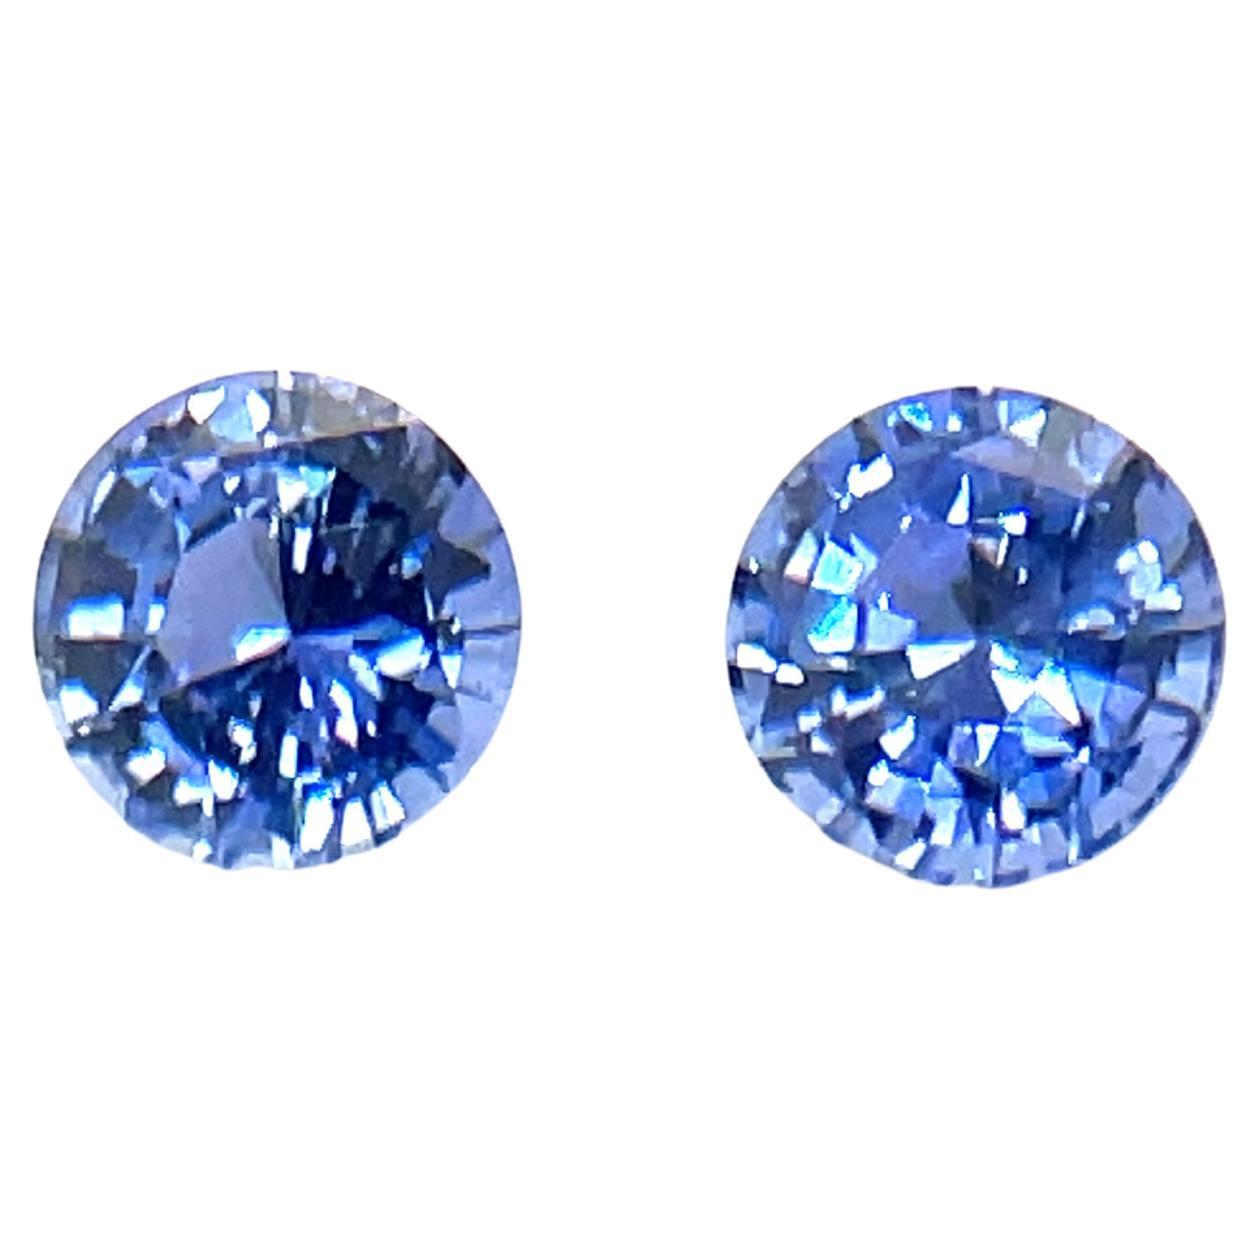 2 Natural Round Diamond-Cut Blue Sapphires Cts 1.21